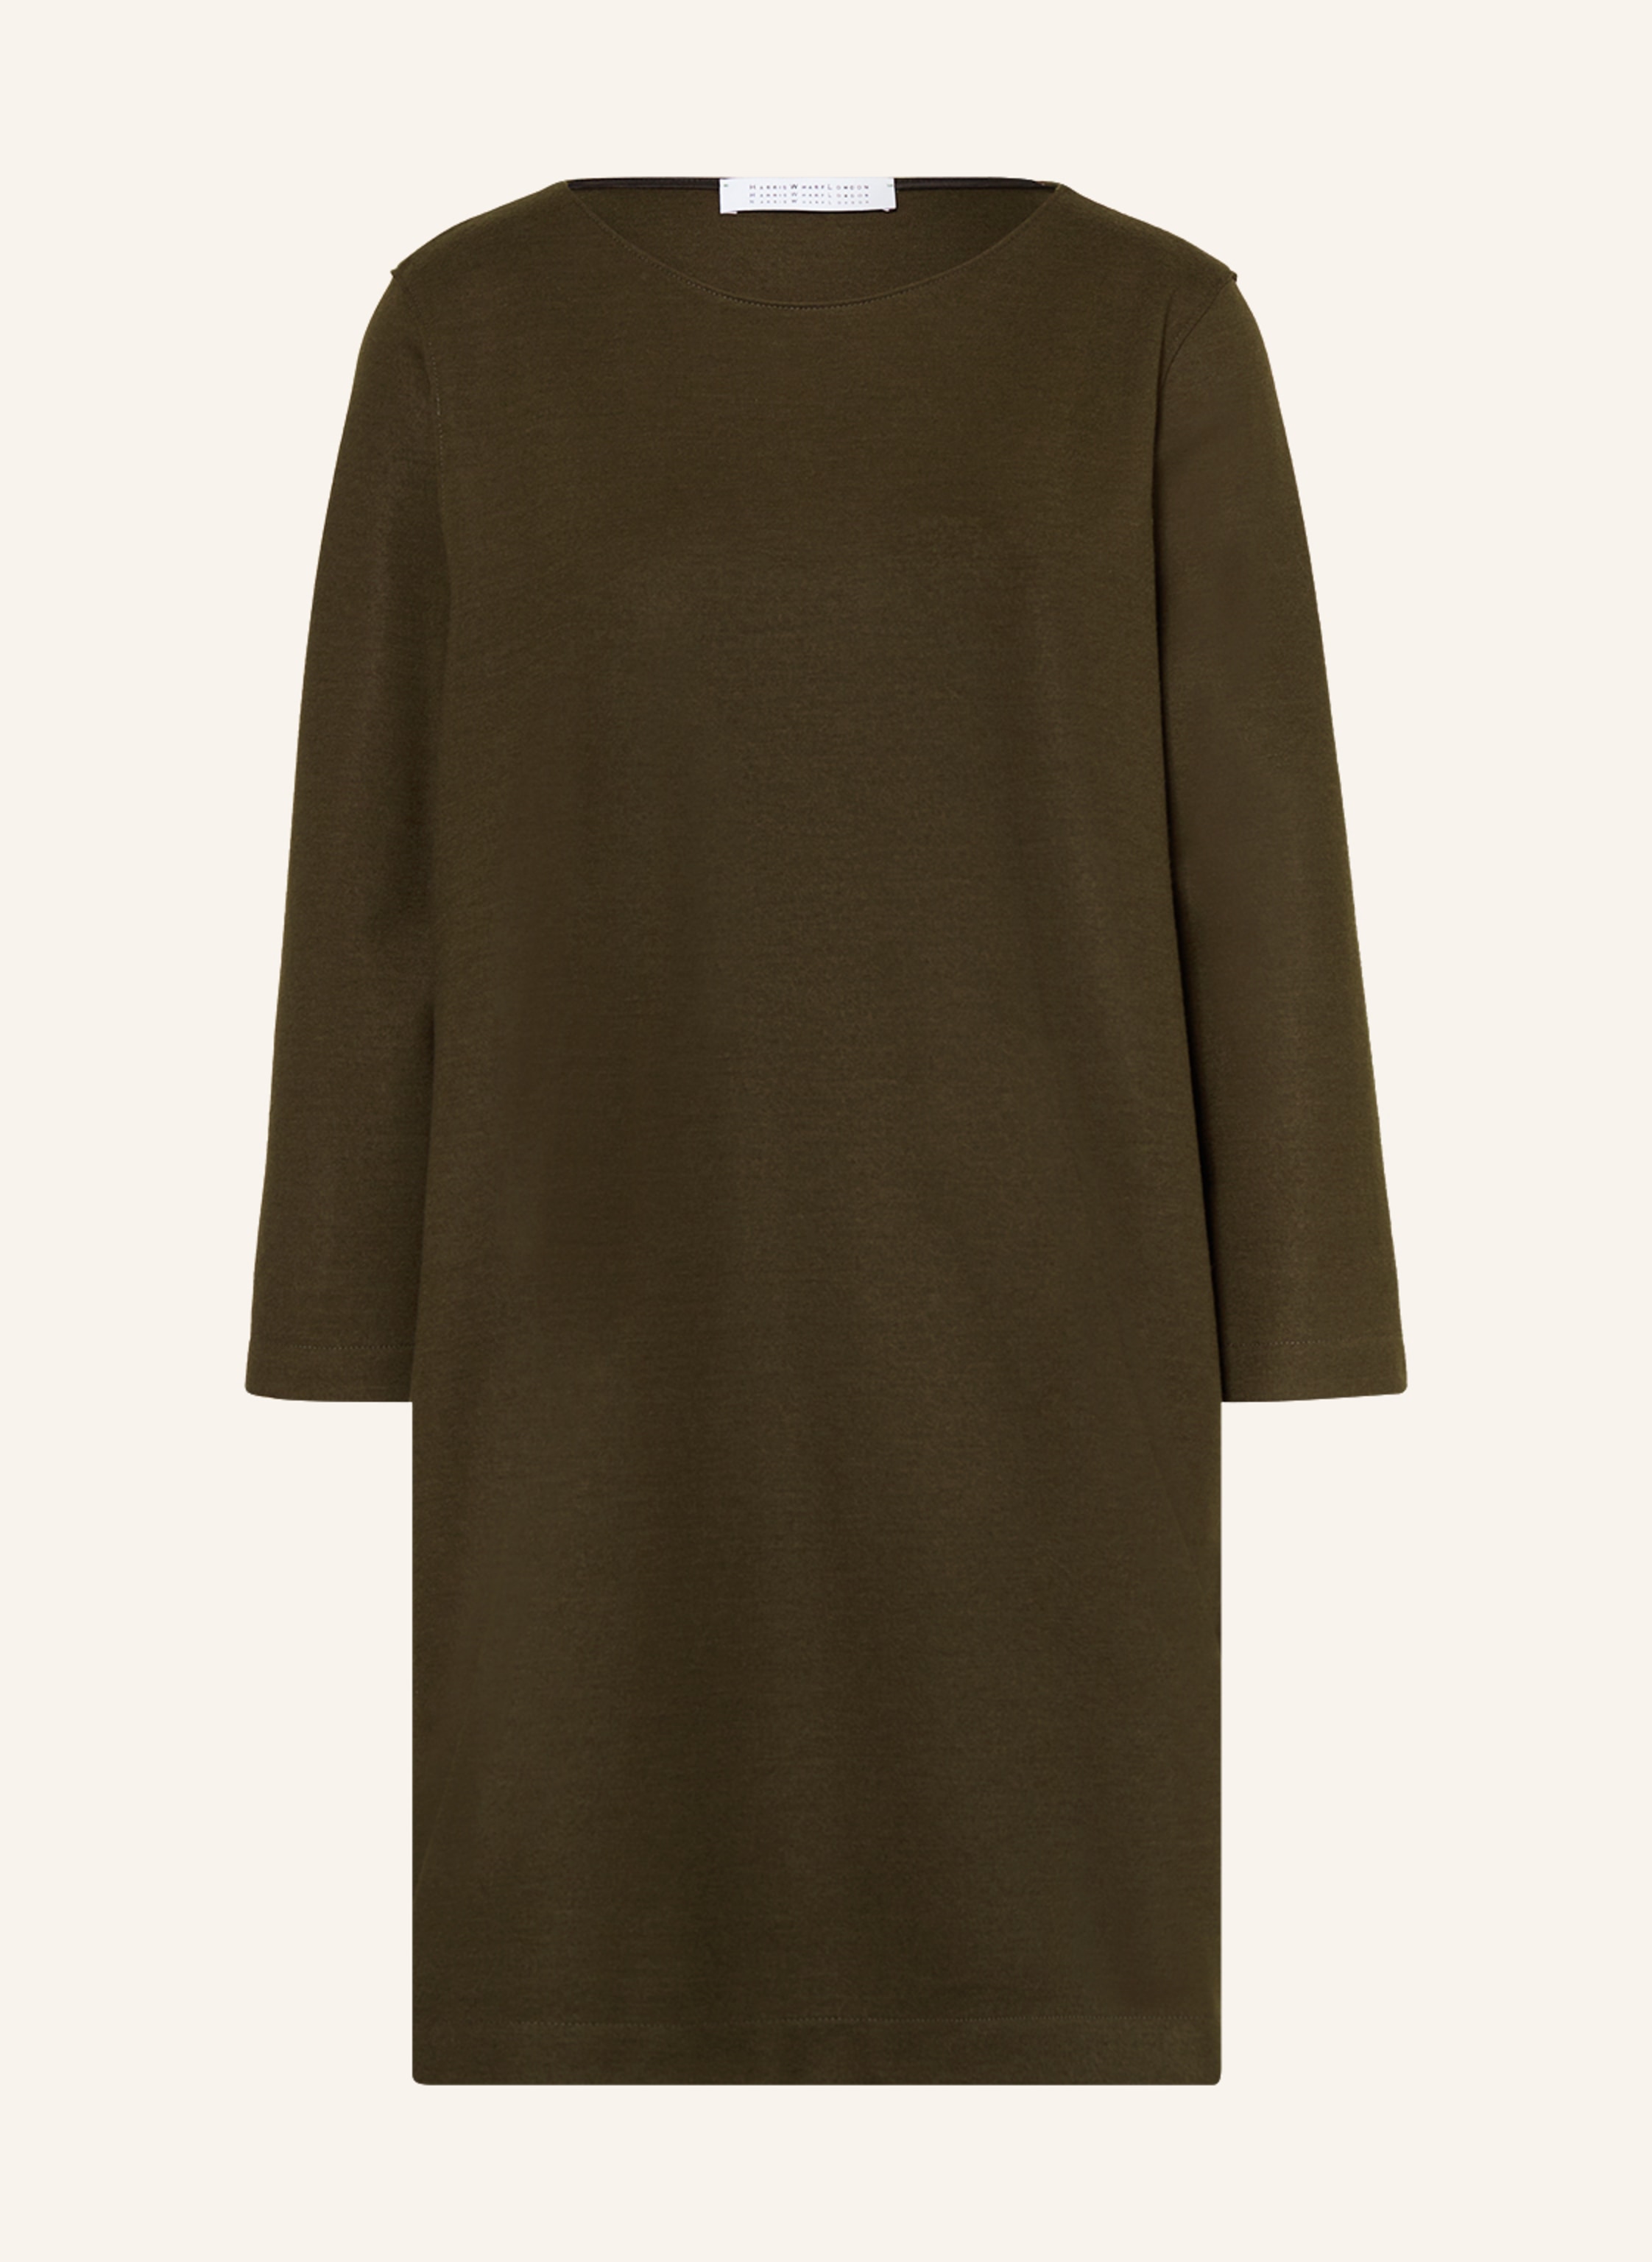 HARRIS WHARF LONDON Kleid mit 3/4-Arm in khaki